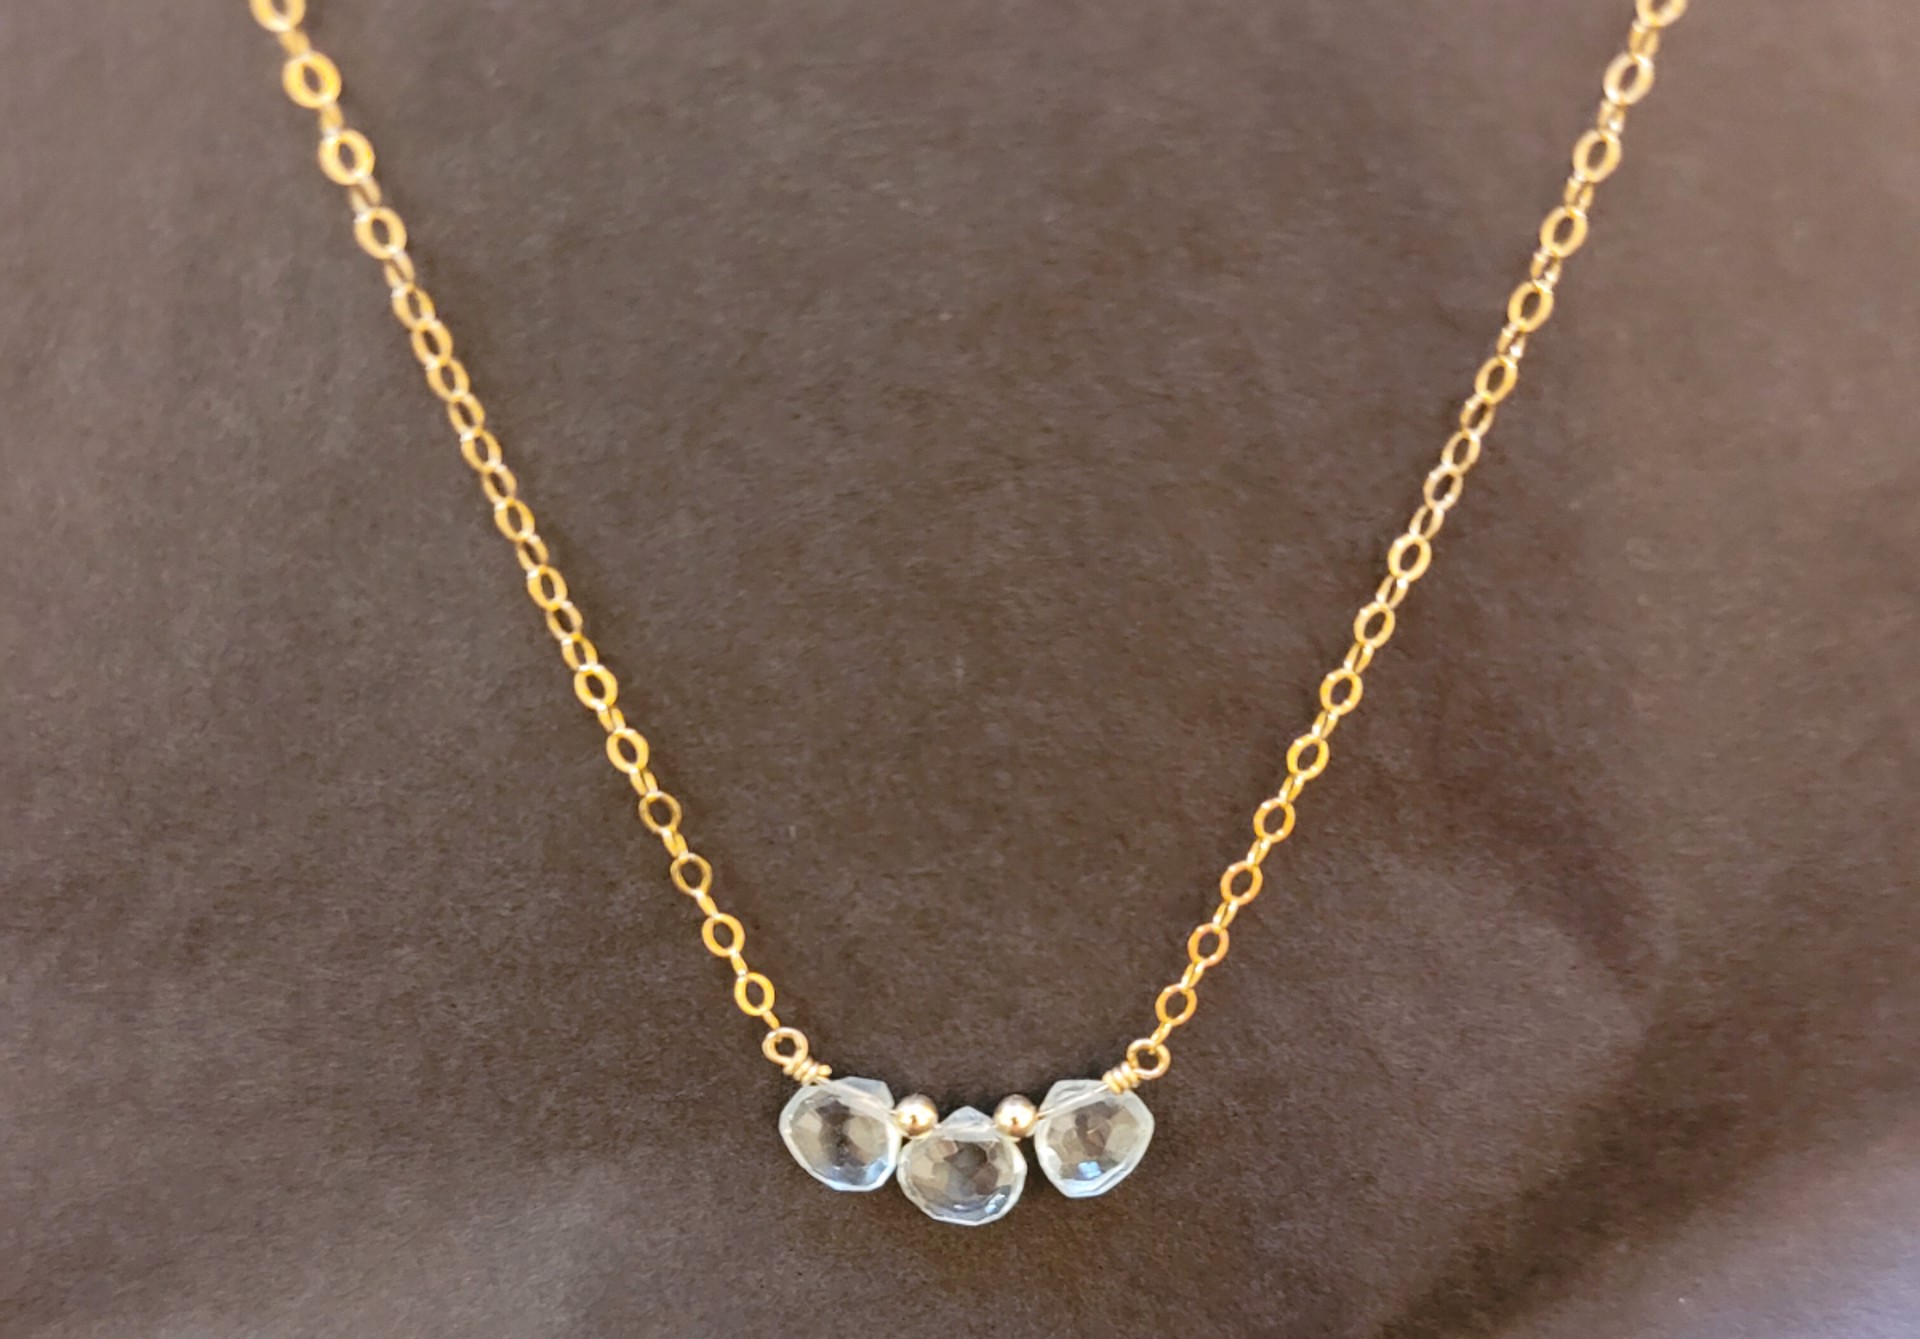 Necklace - Aquamarine 3 Stone 14K Gold Filled by Julia Balestracci